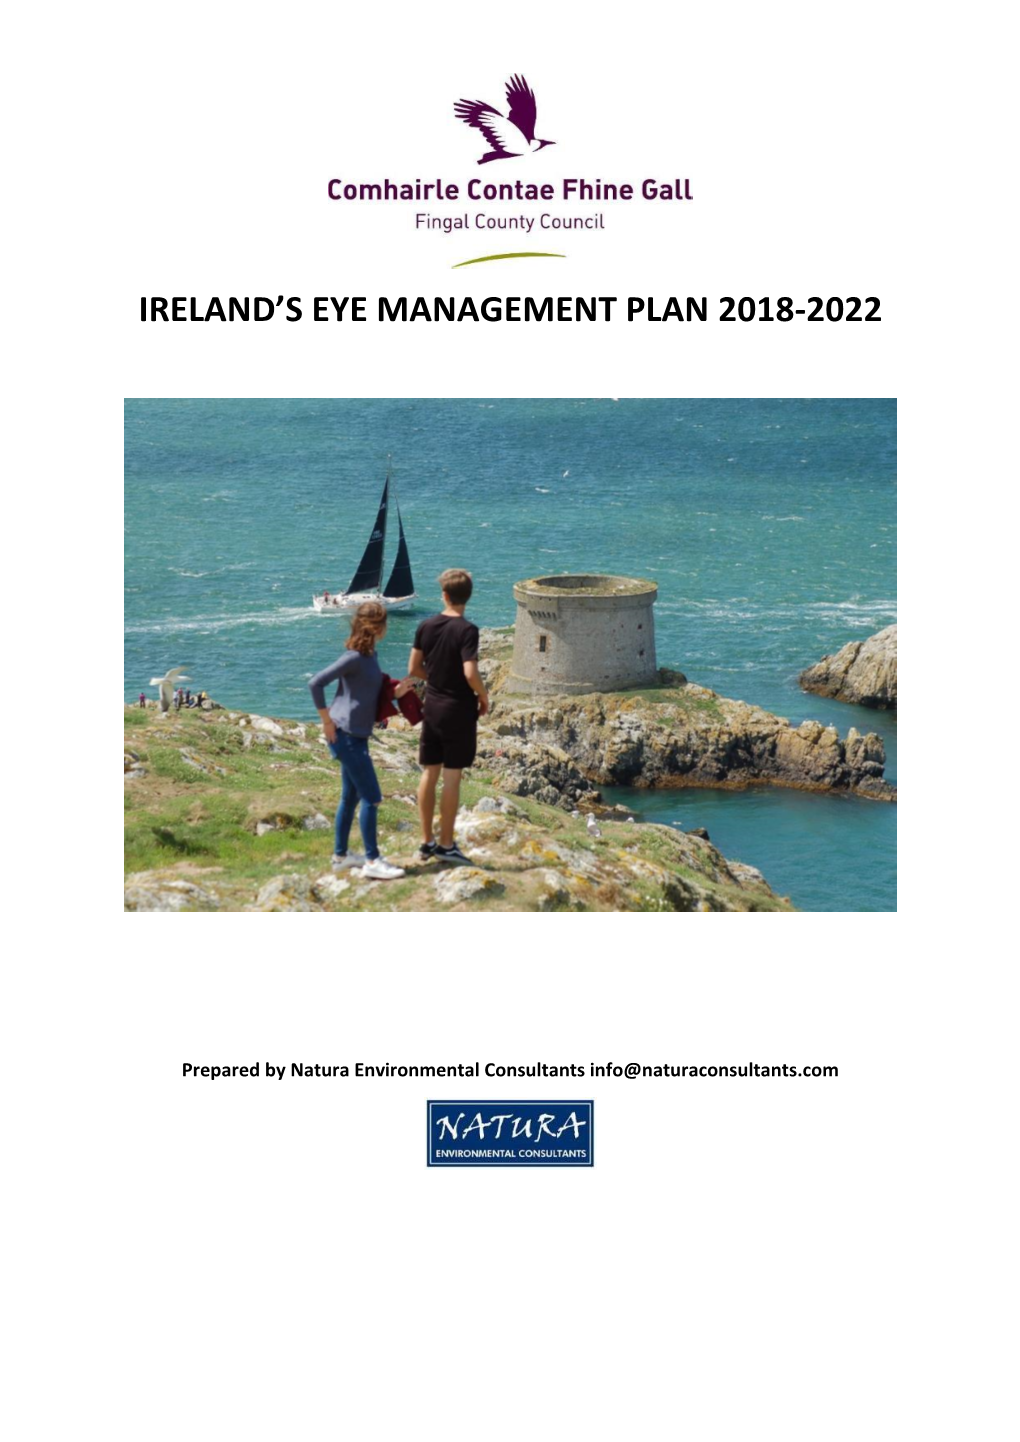 Ireland's Eye Management Plan 2018-2022